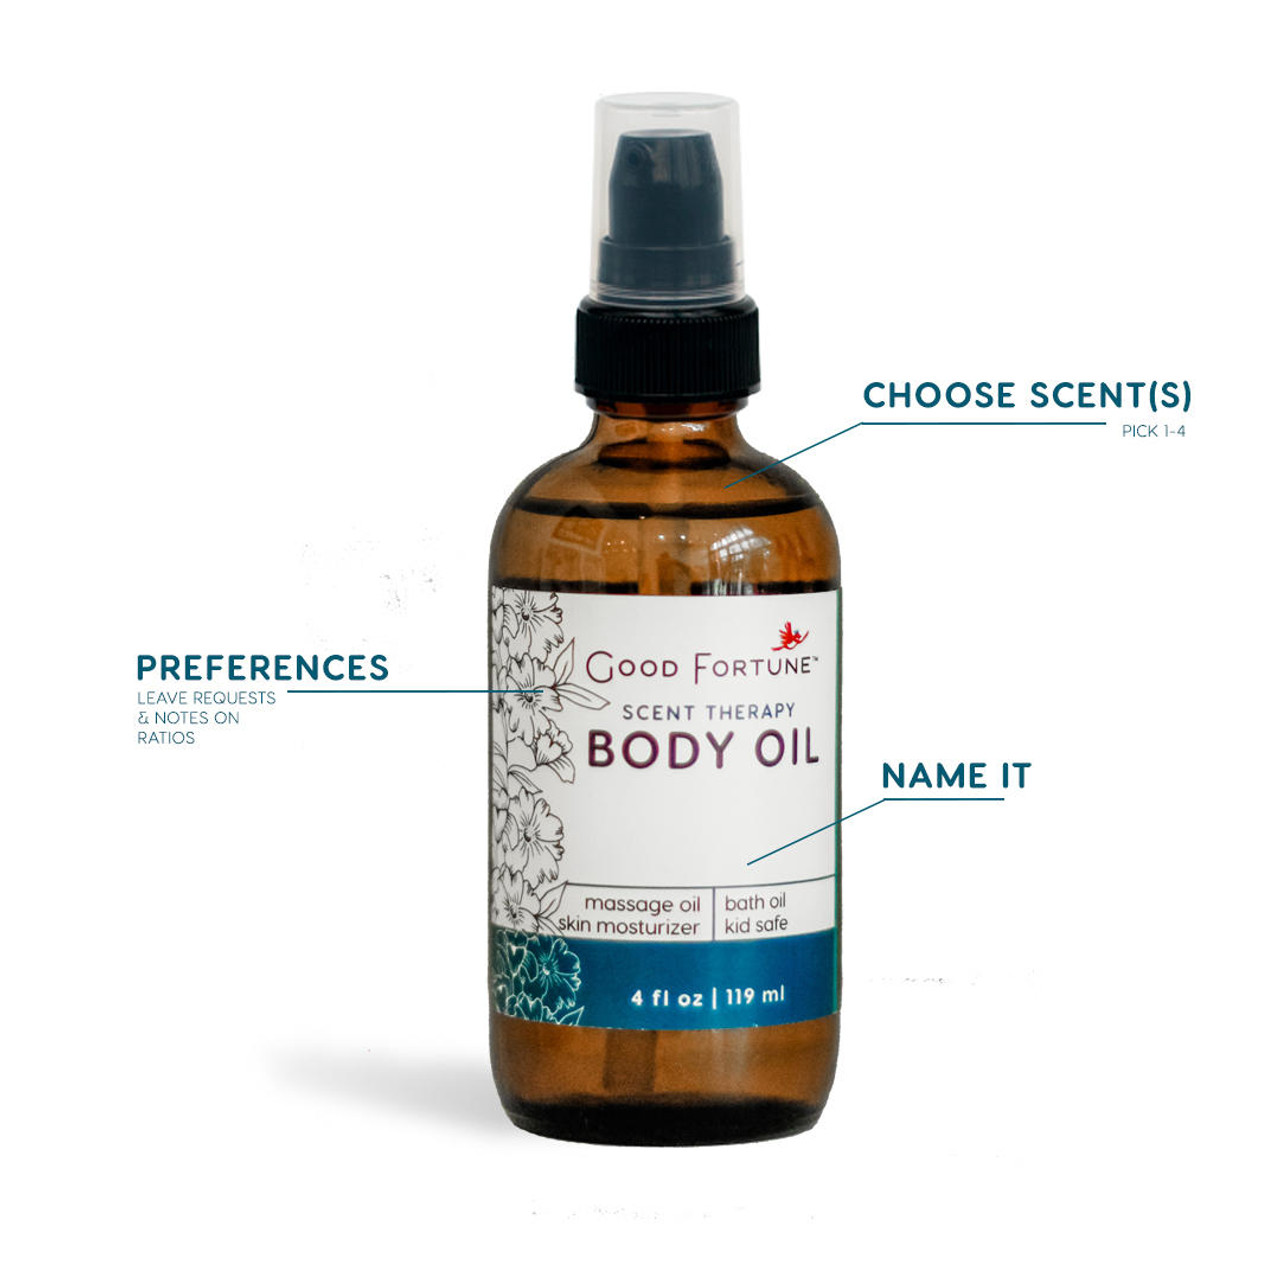 Vanilla Sugar Body Oil Dry Oil Moisturizing Body Oil Spray Oil